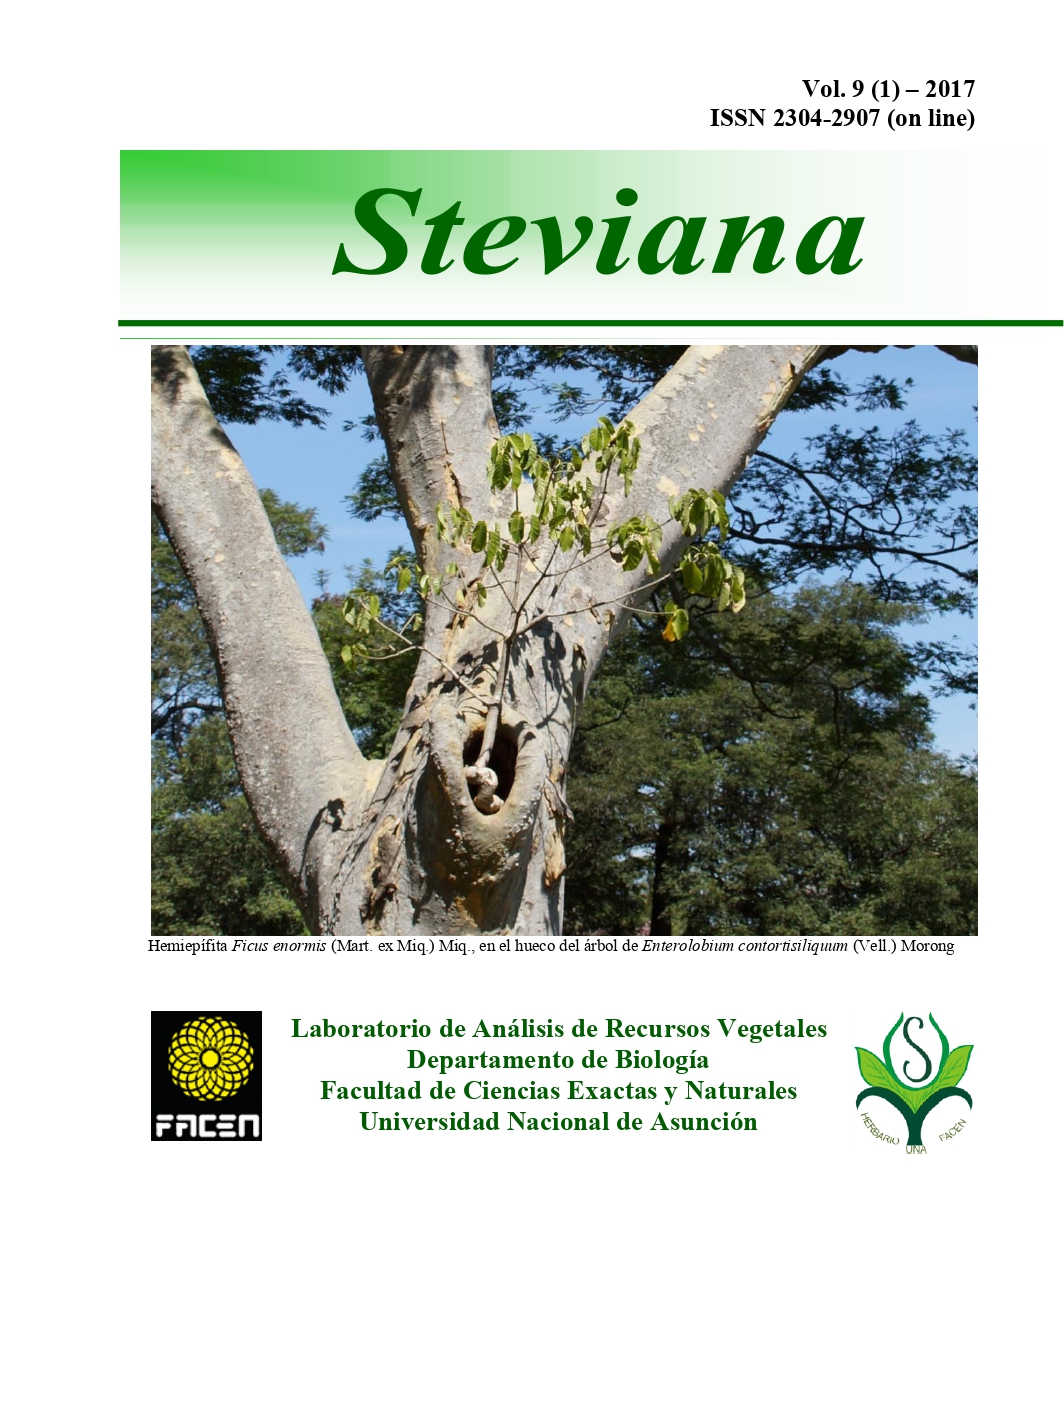 					Ver Vol. 9 Núm. 1 (2017): Steviana
				